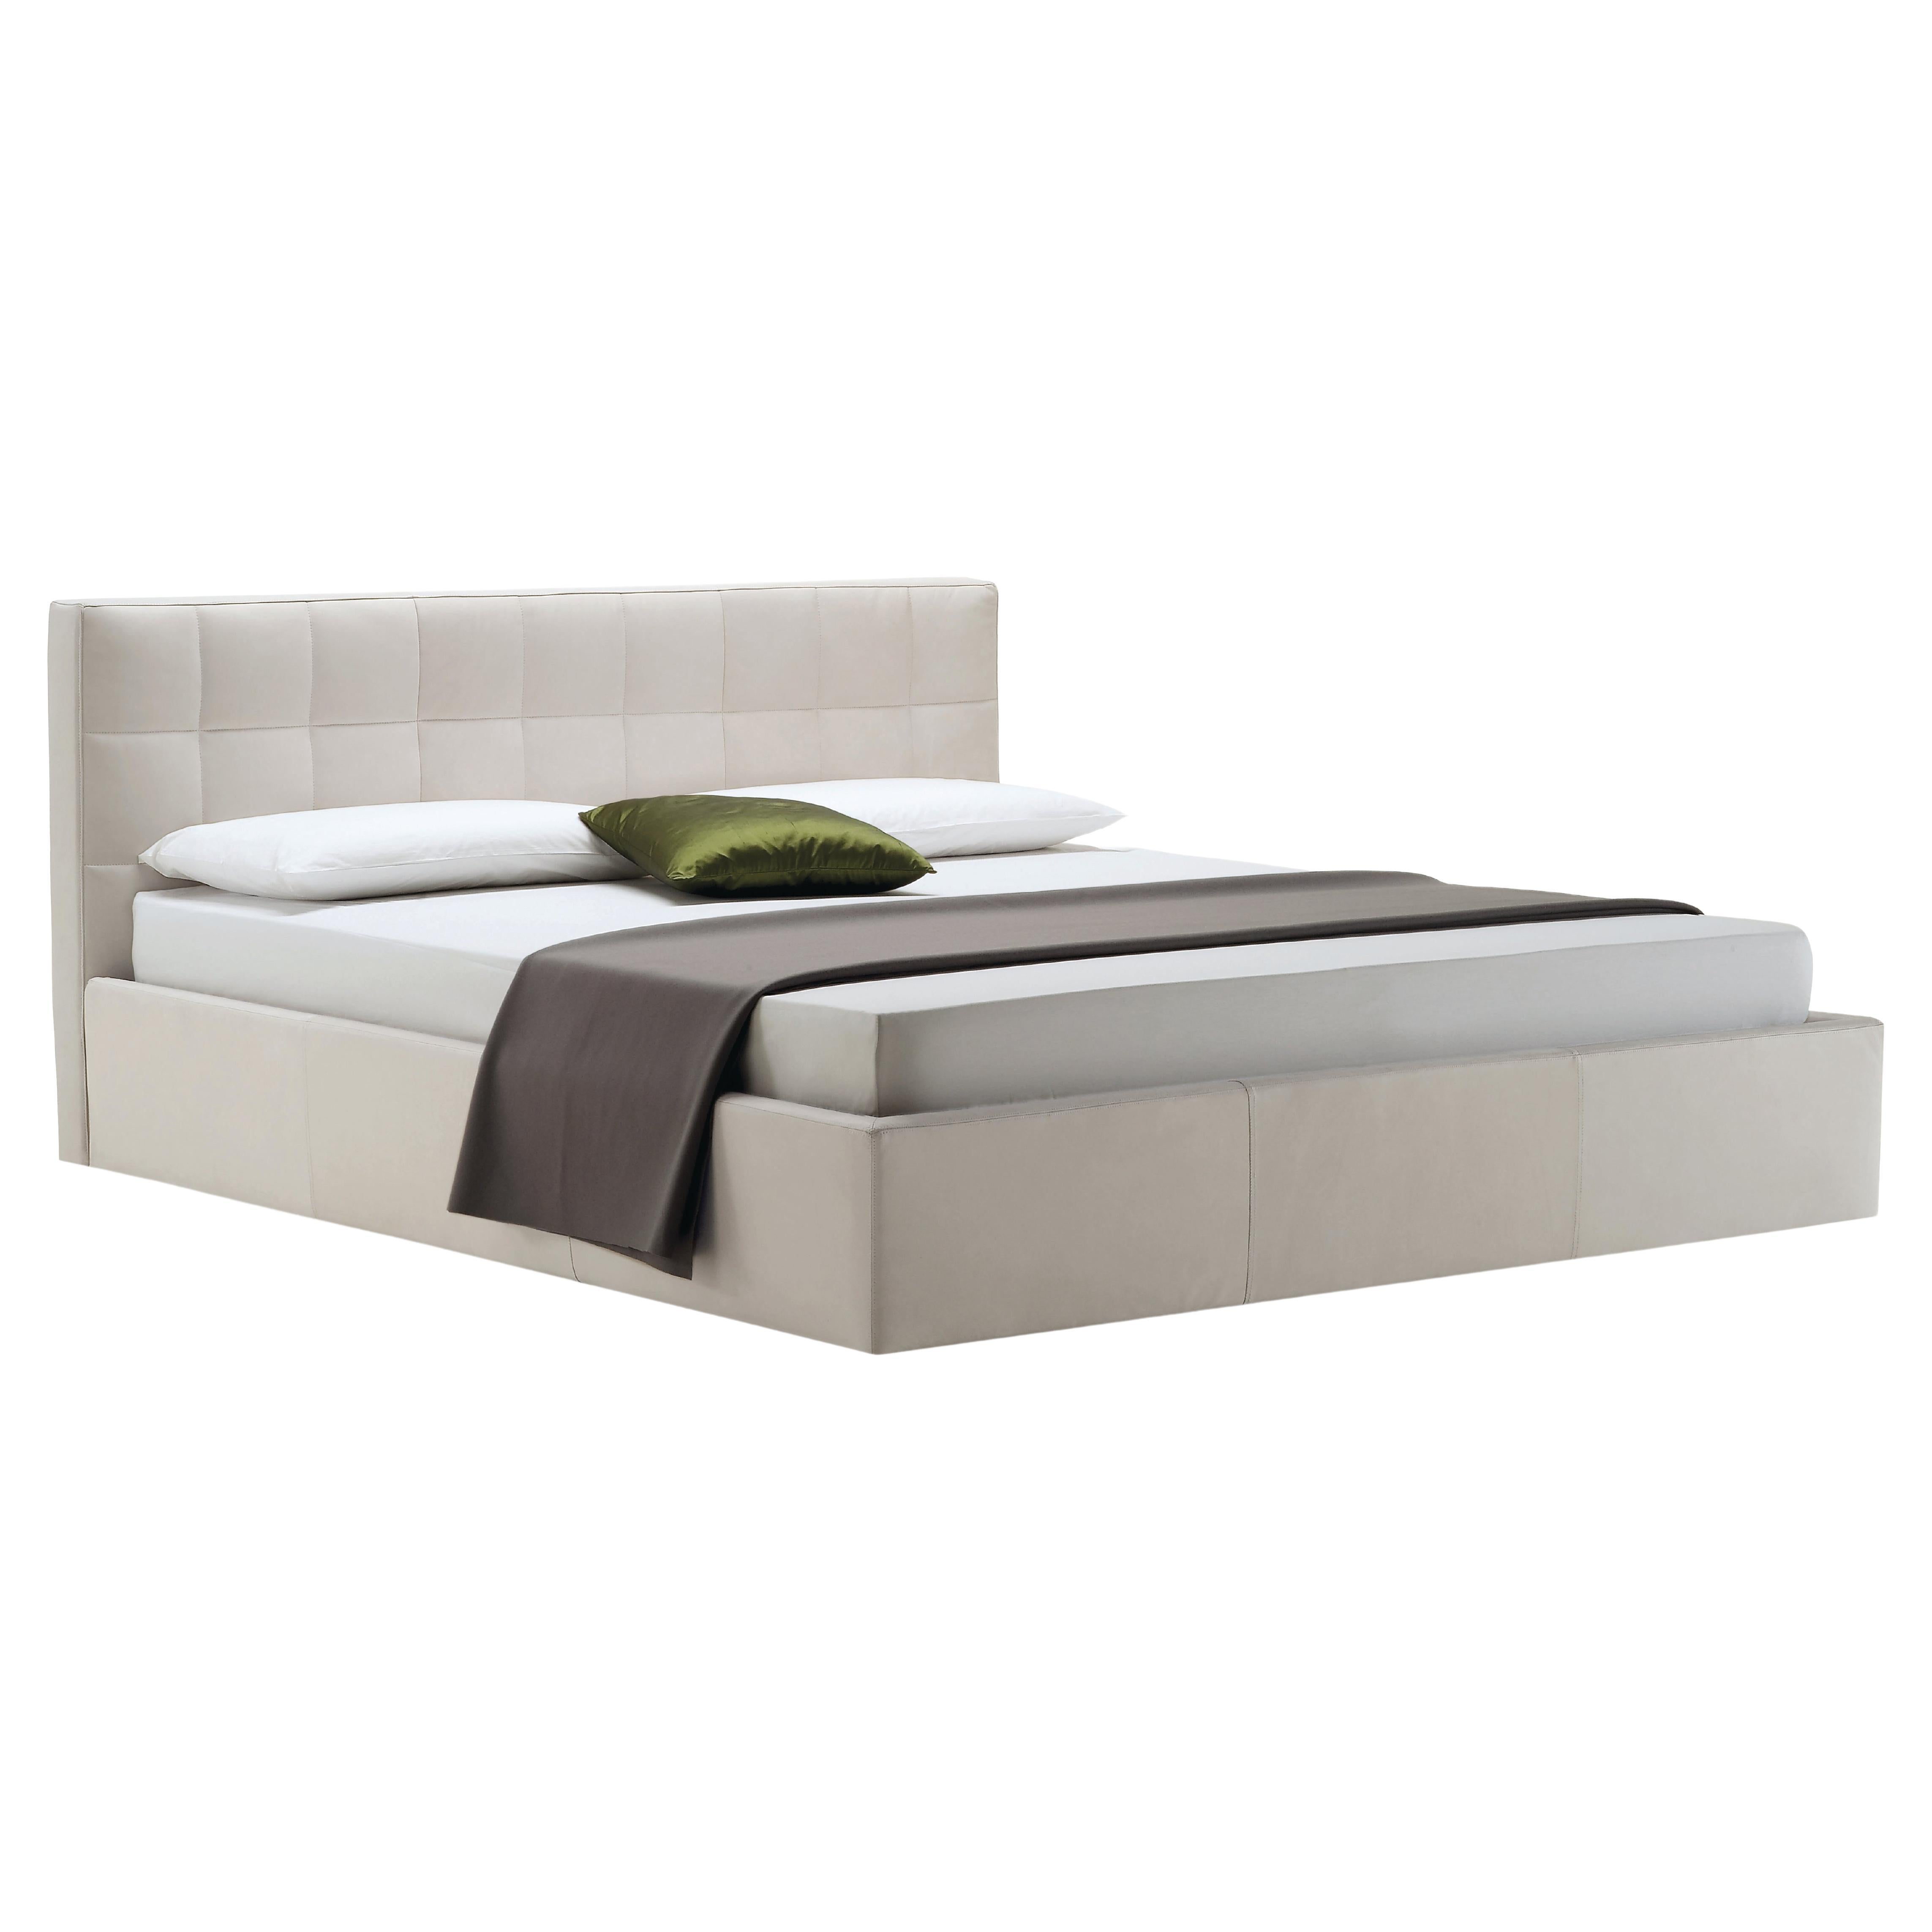 Grand lit Zanotta avec meuble de rangement en tissu beige avec cadre en acier